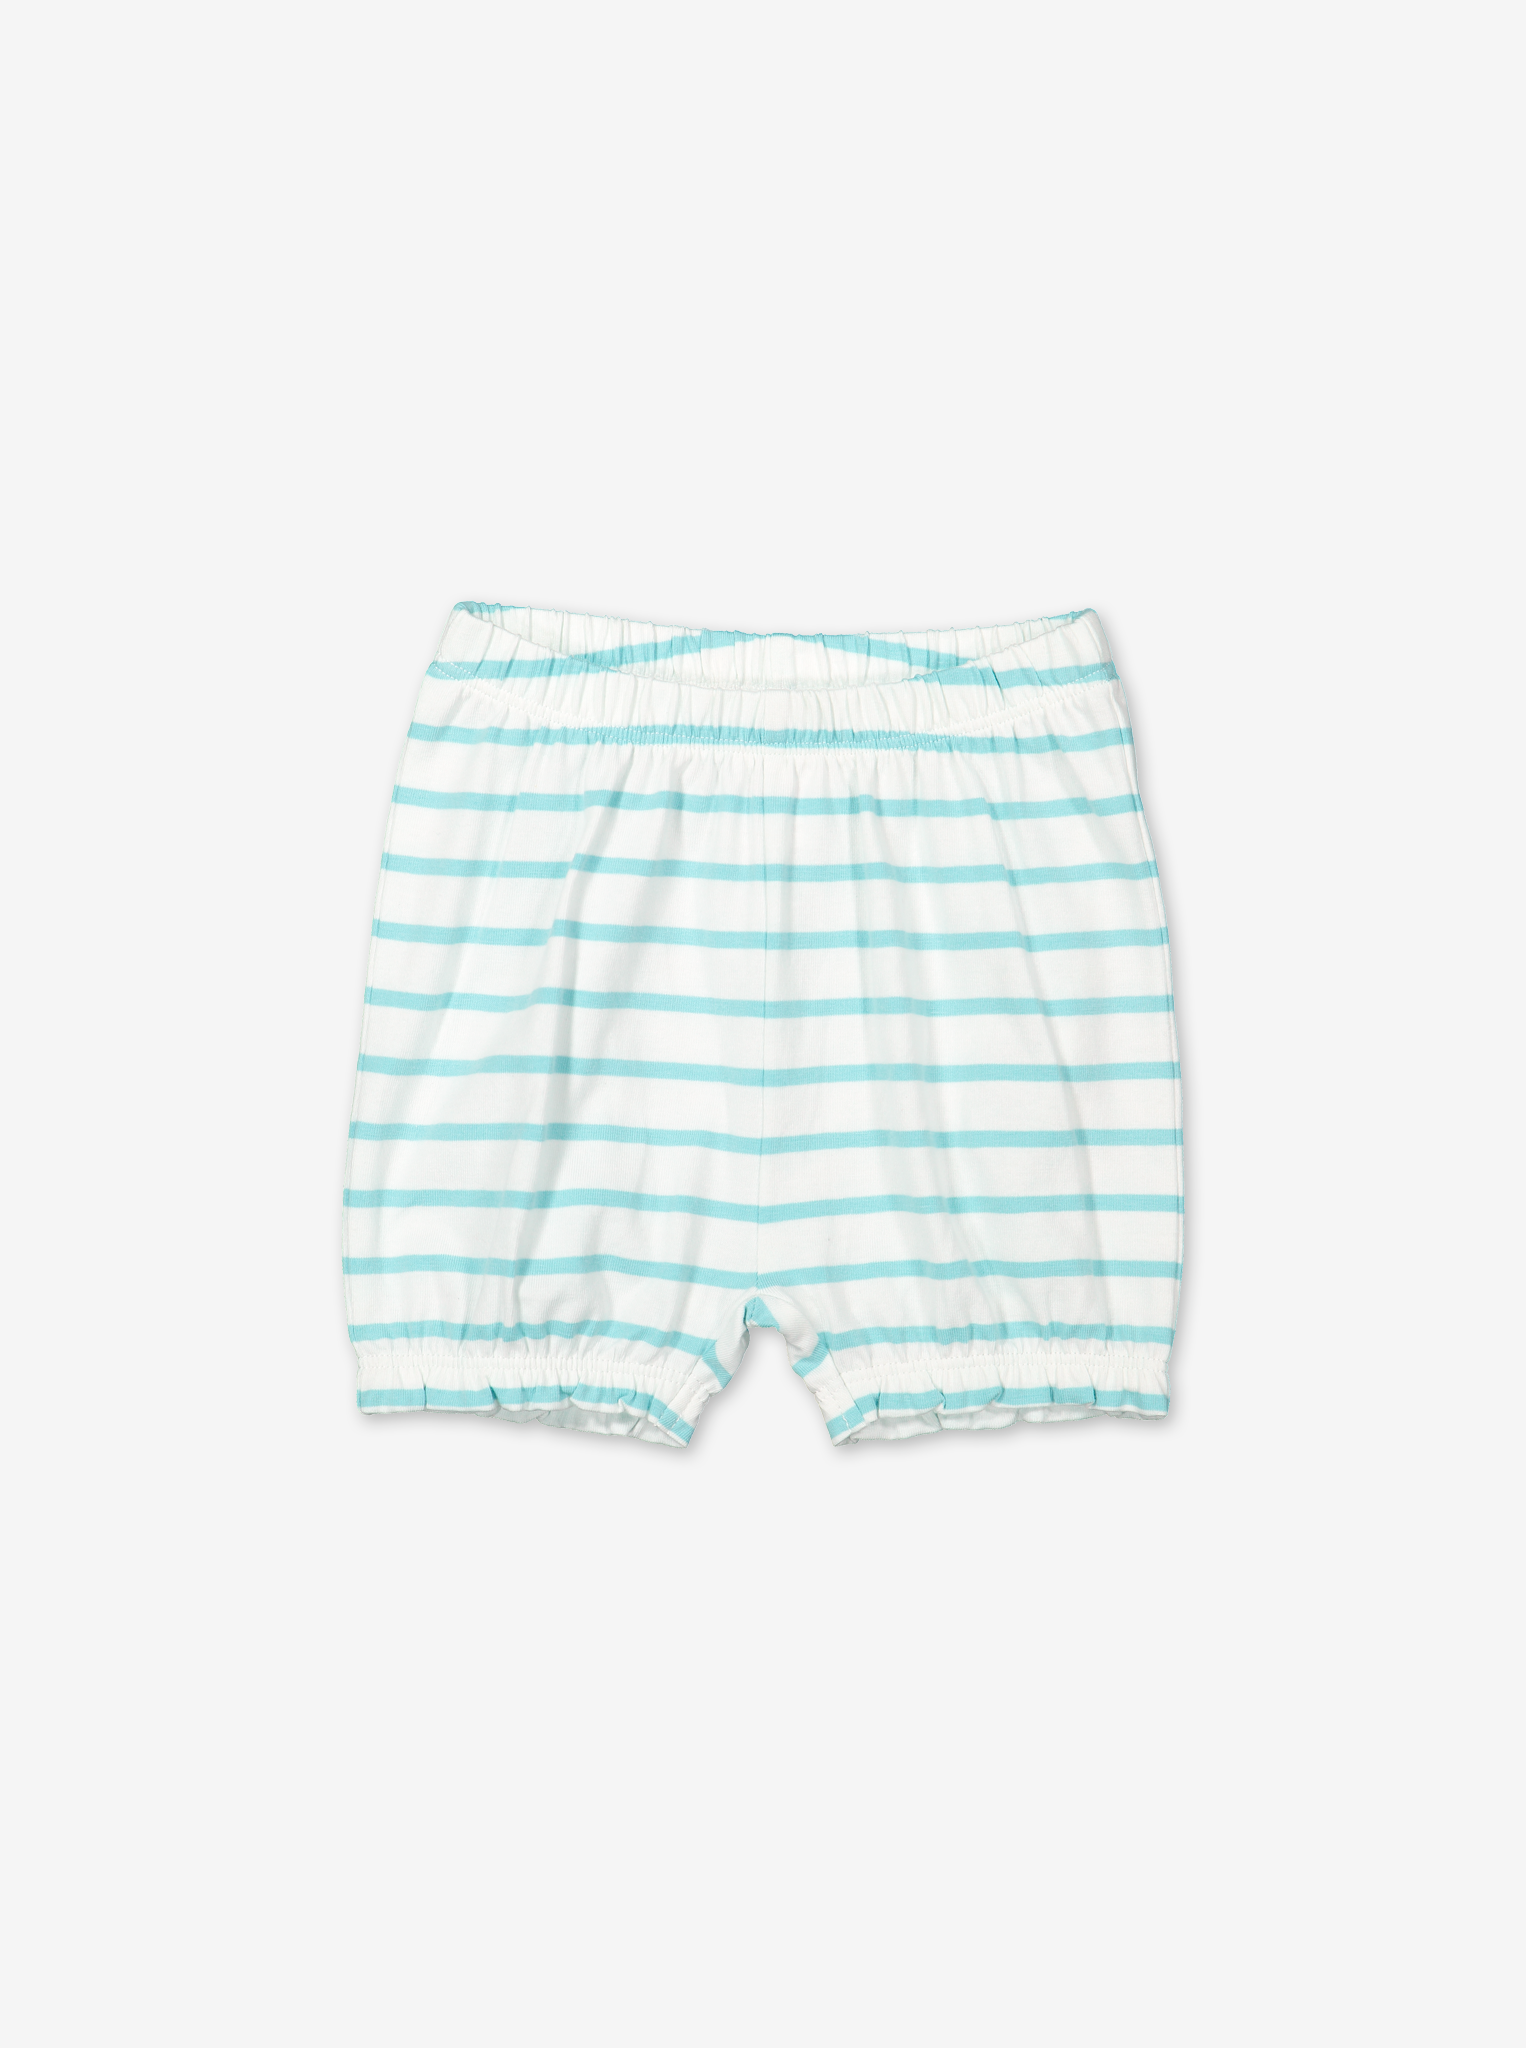 Pond Print Baby Dress &amp; Shorts Set-Girl-0-1y-Turquoise